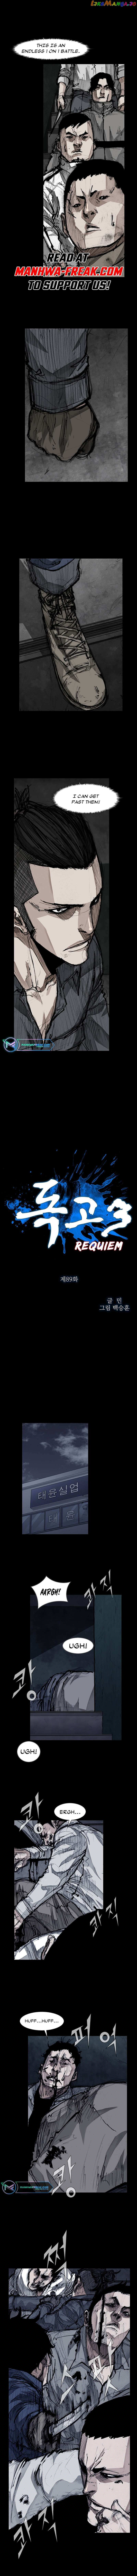 Dokgo 3: Requiem - Page 2